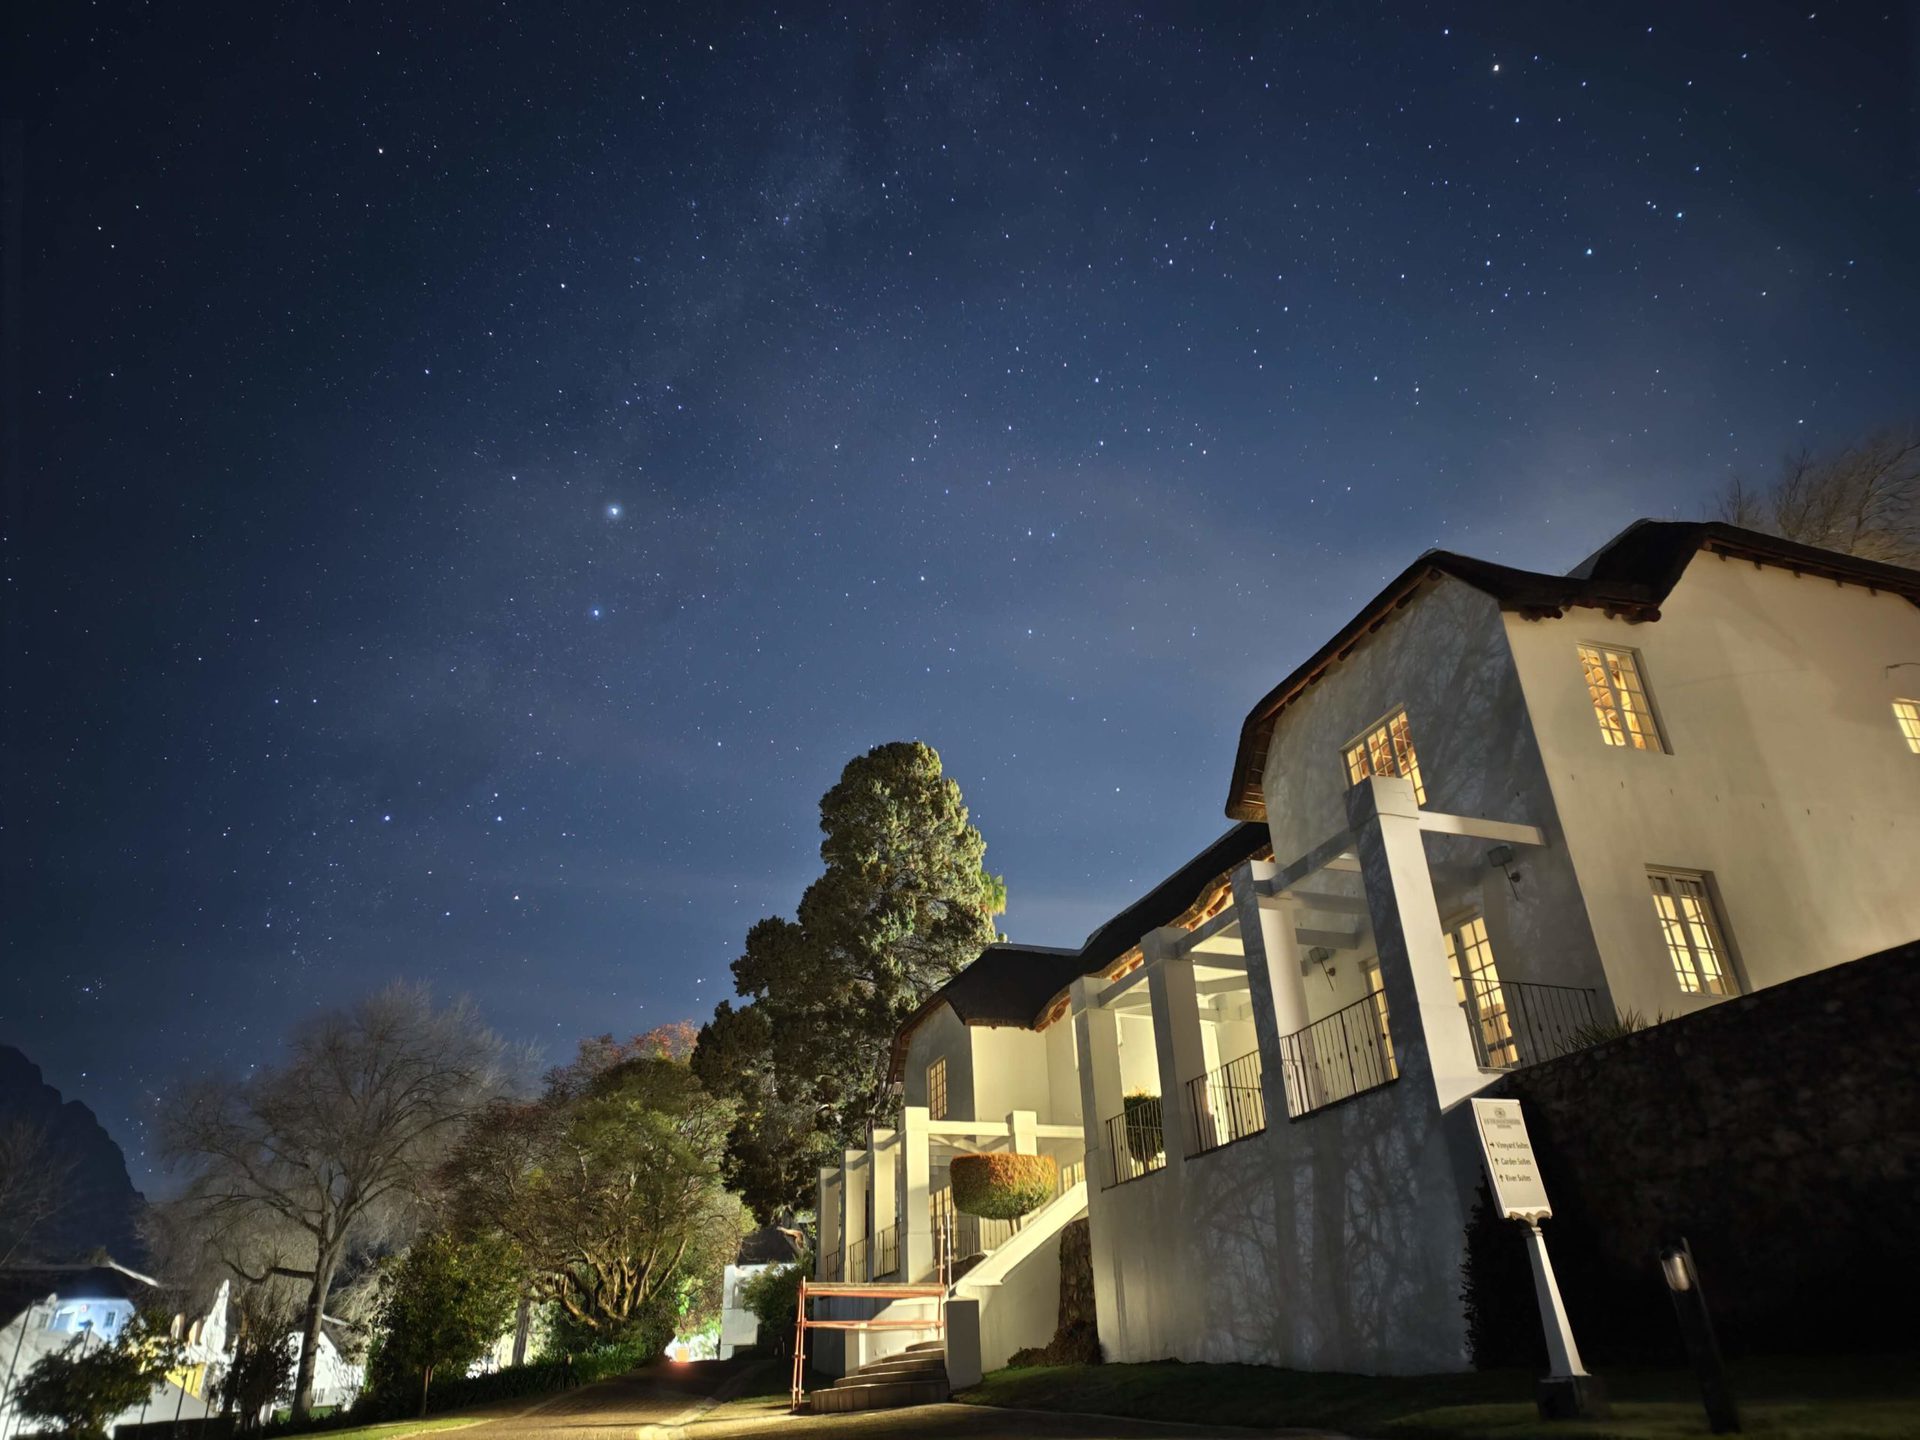 Vivo X60 Pro Plus天体摄影模式显示了一栋房屋和树木在夜空上。